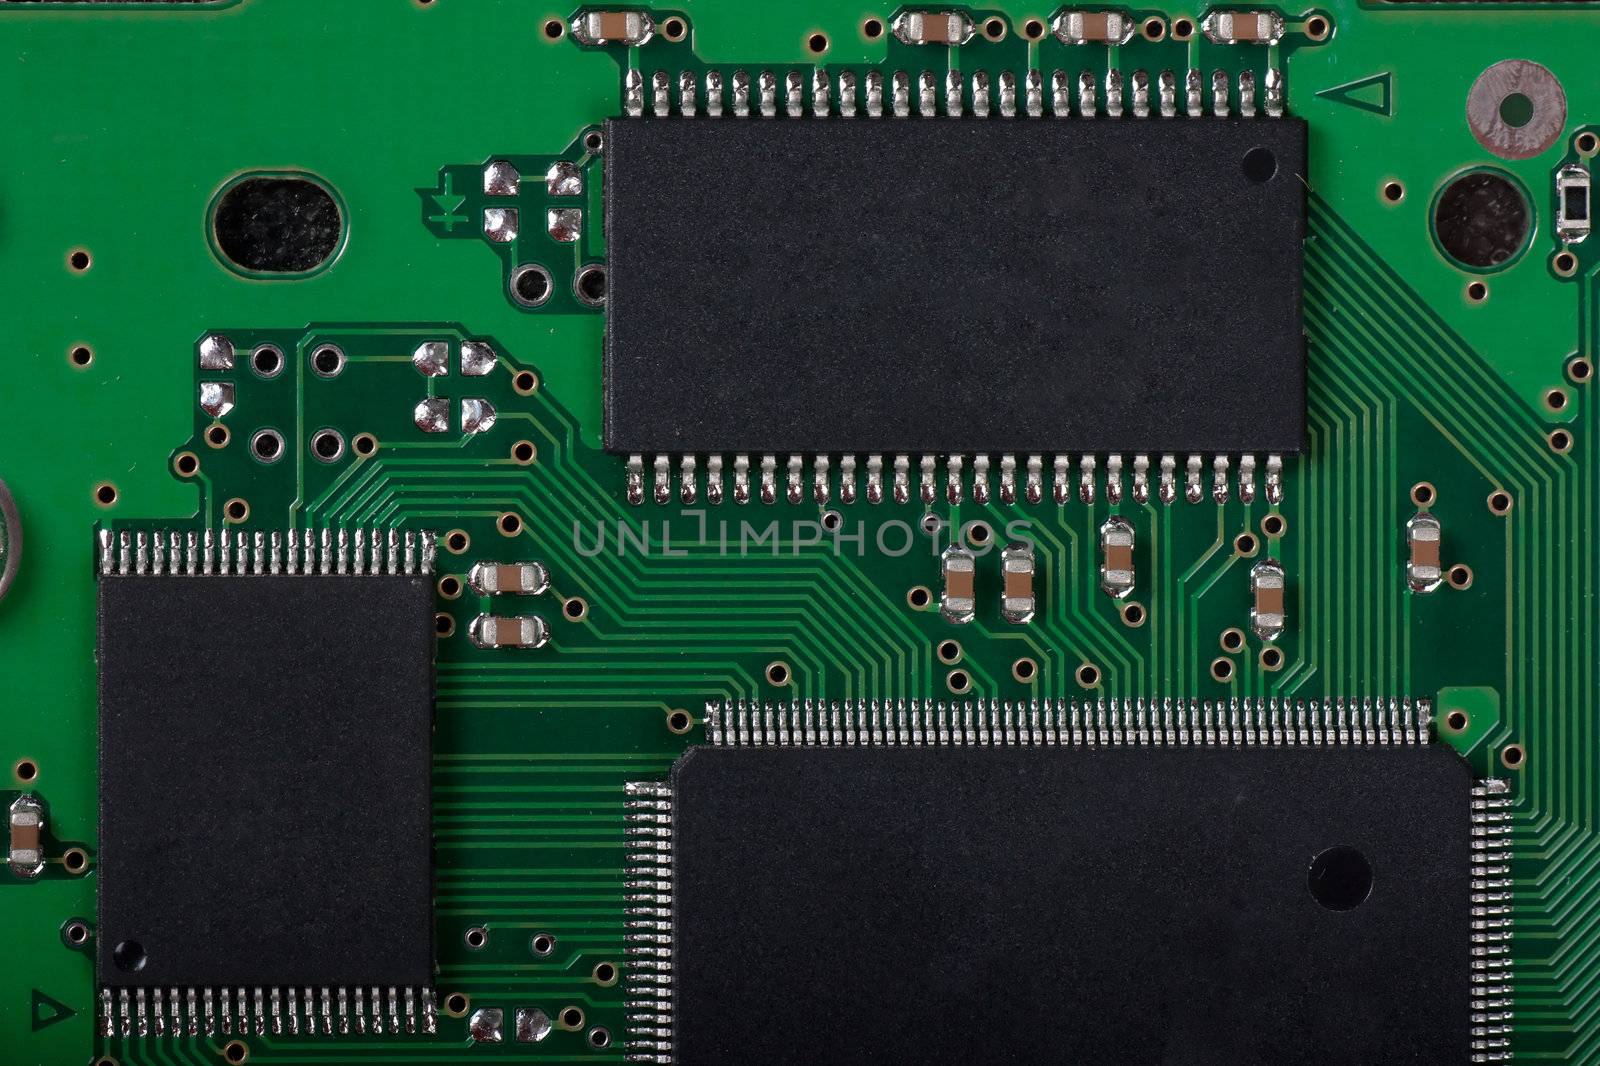 Macro view of electronic circuit board